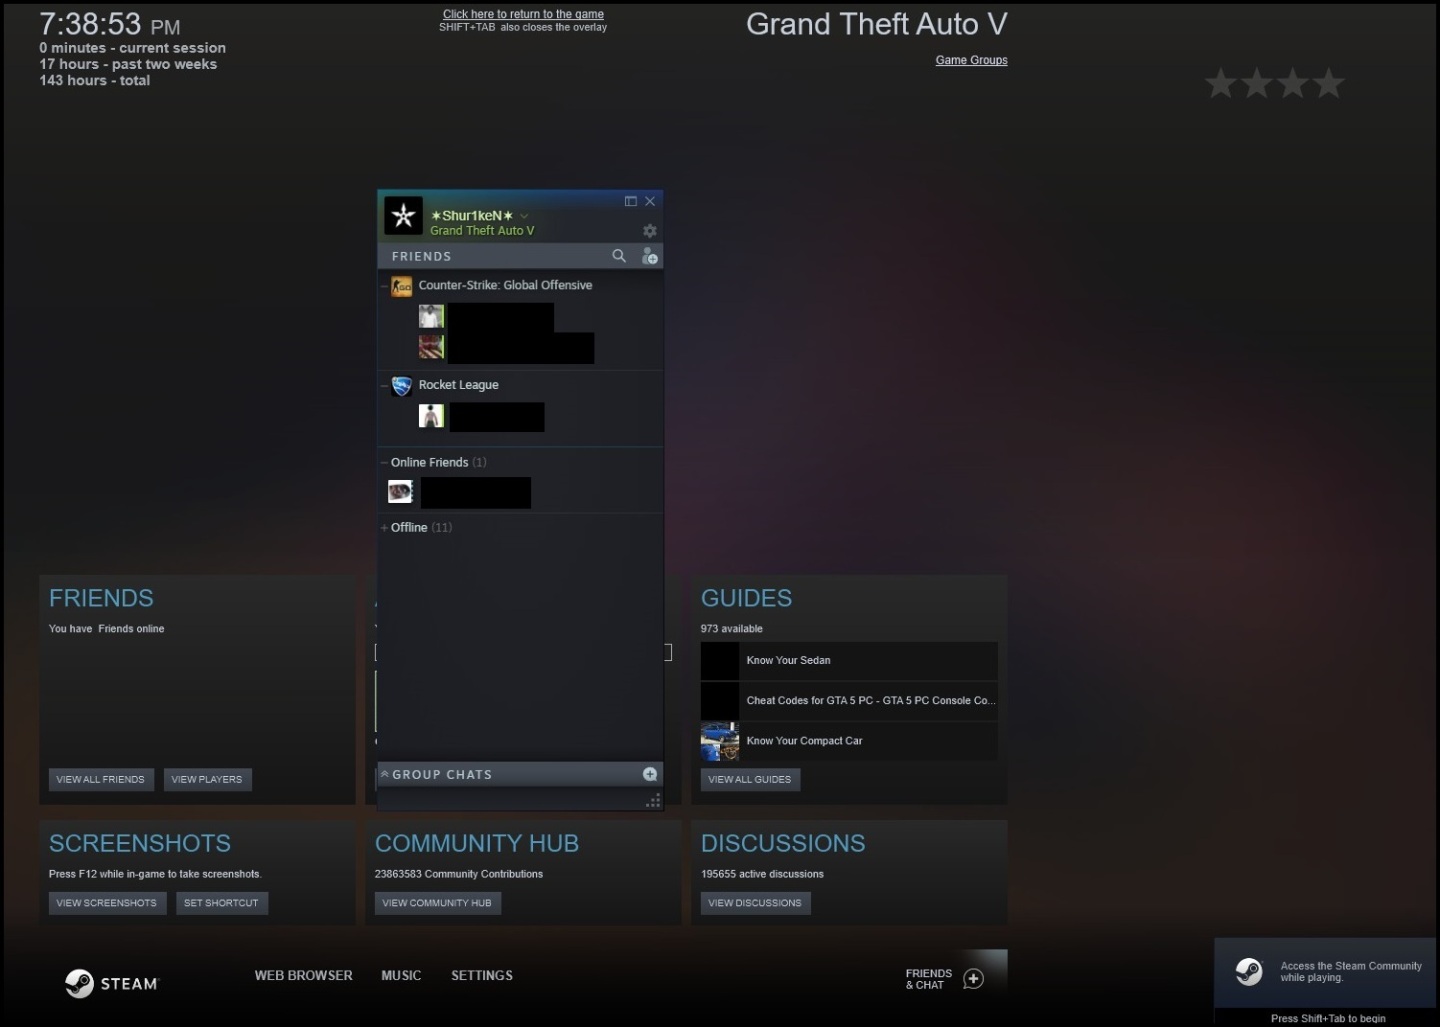 Steam Community :: Screenshot :: Counter-Strike: Condition Zero